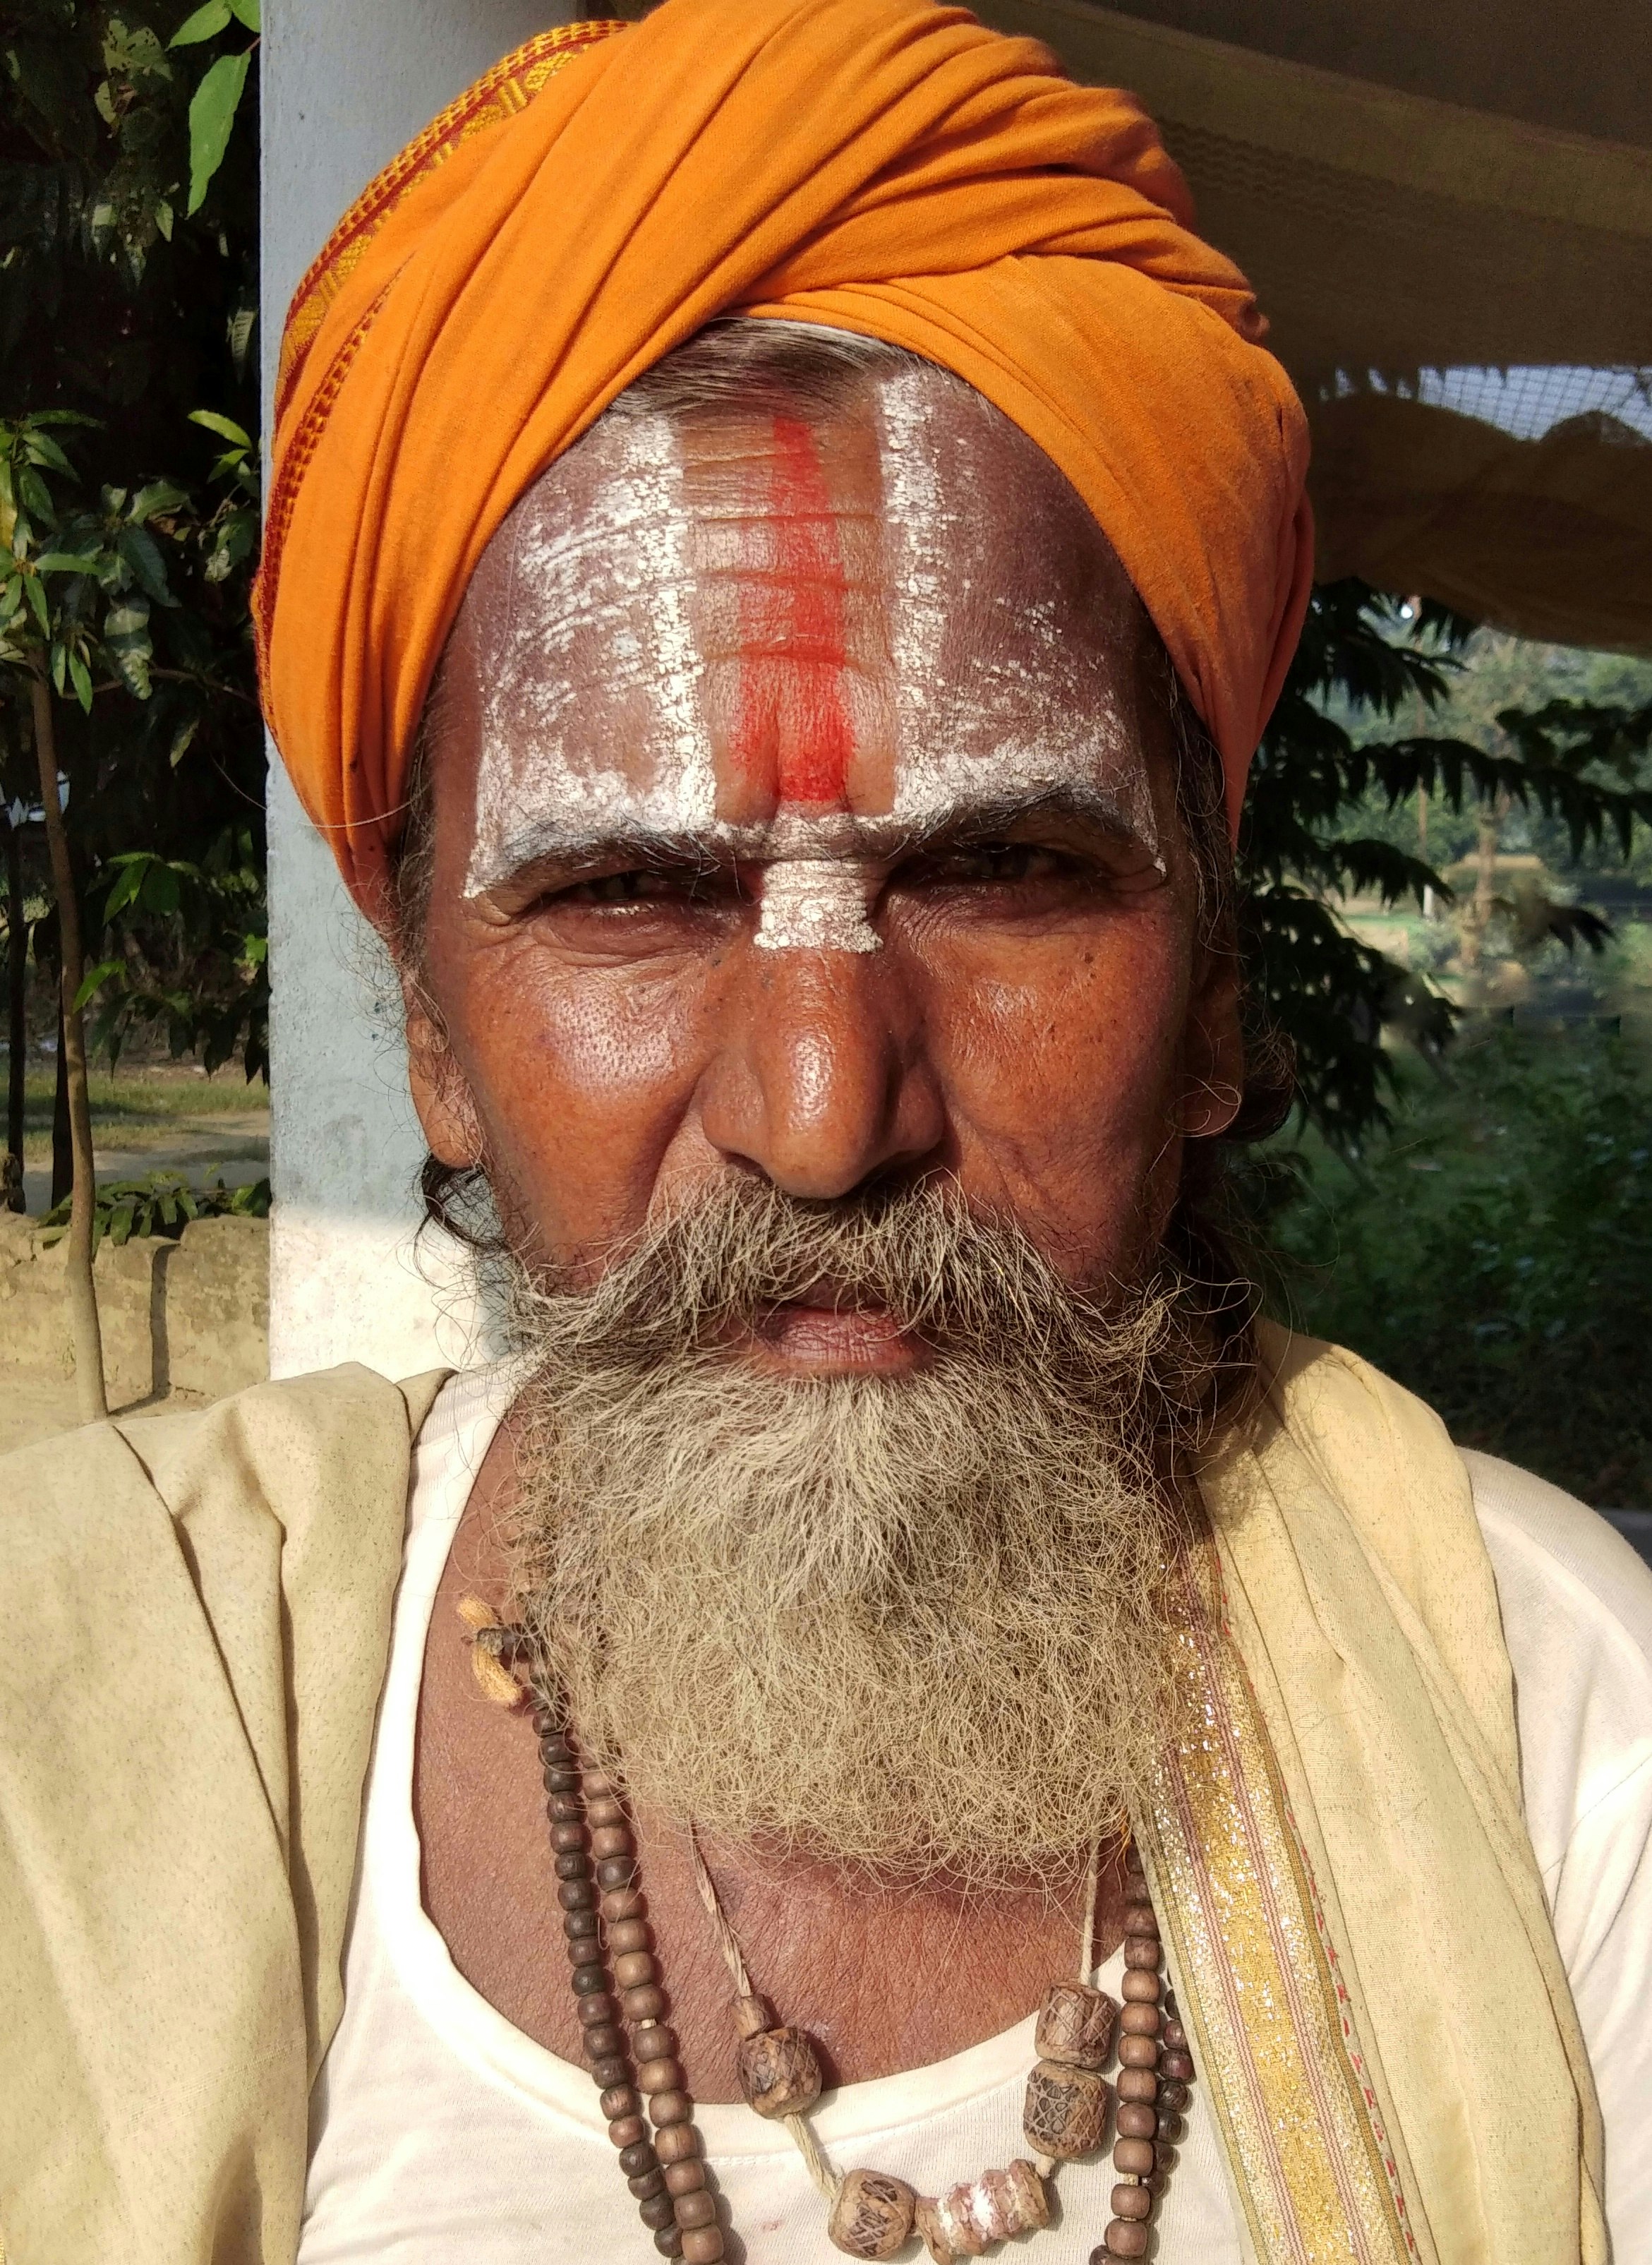 man in orange turban and white shirt